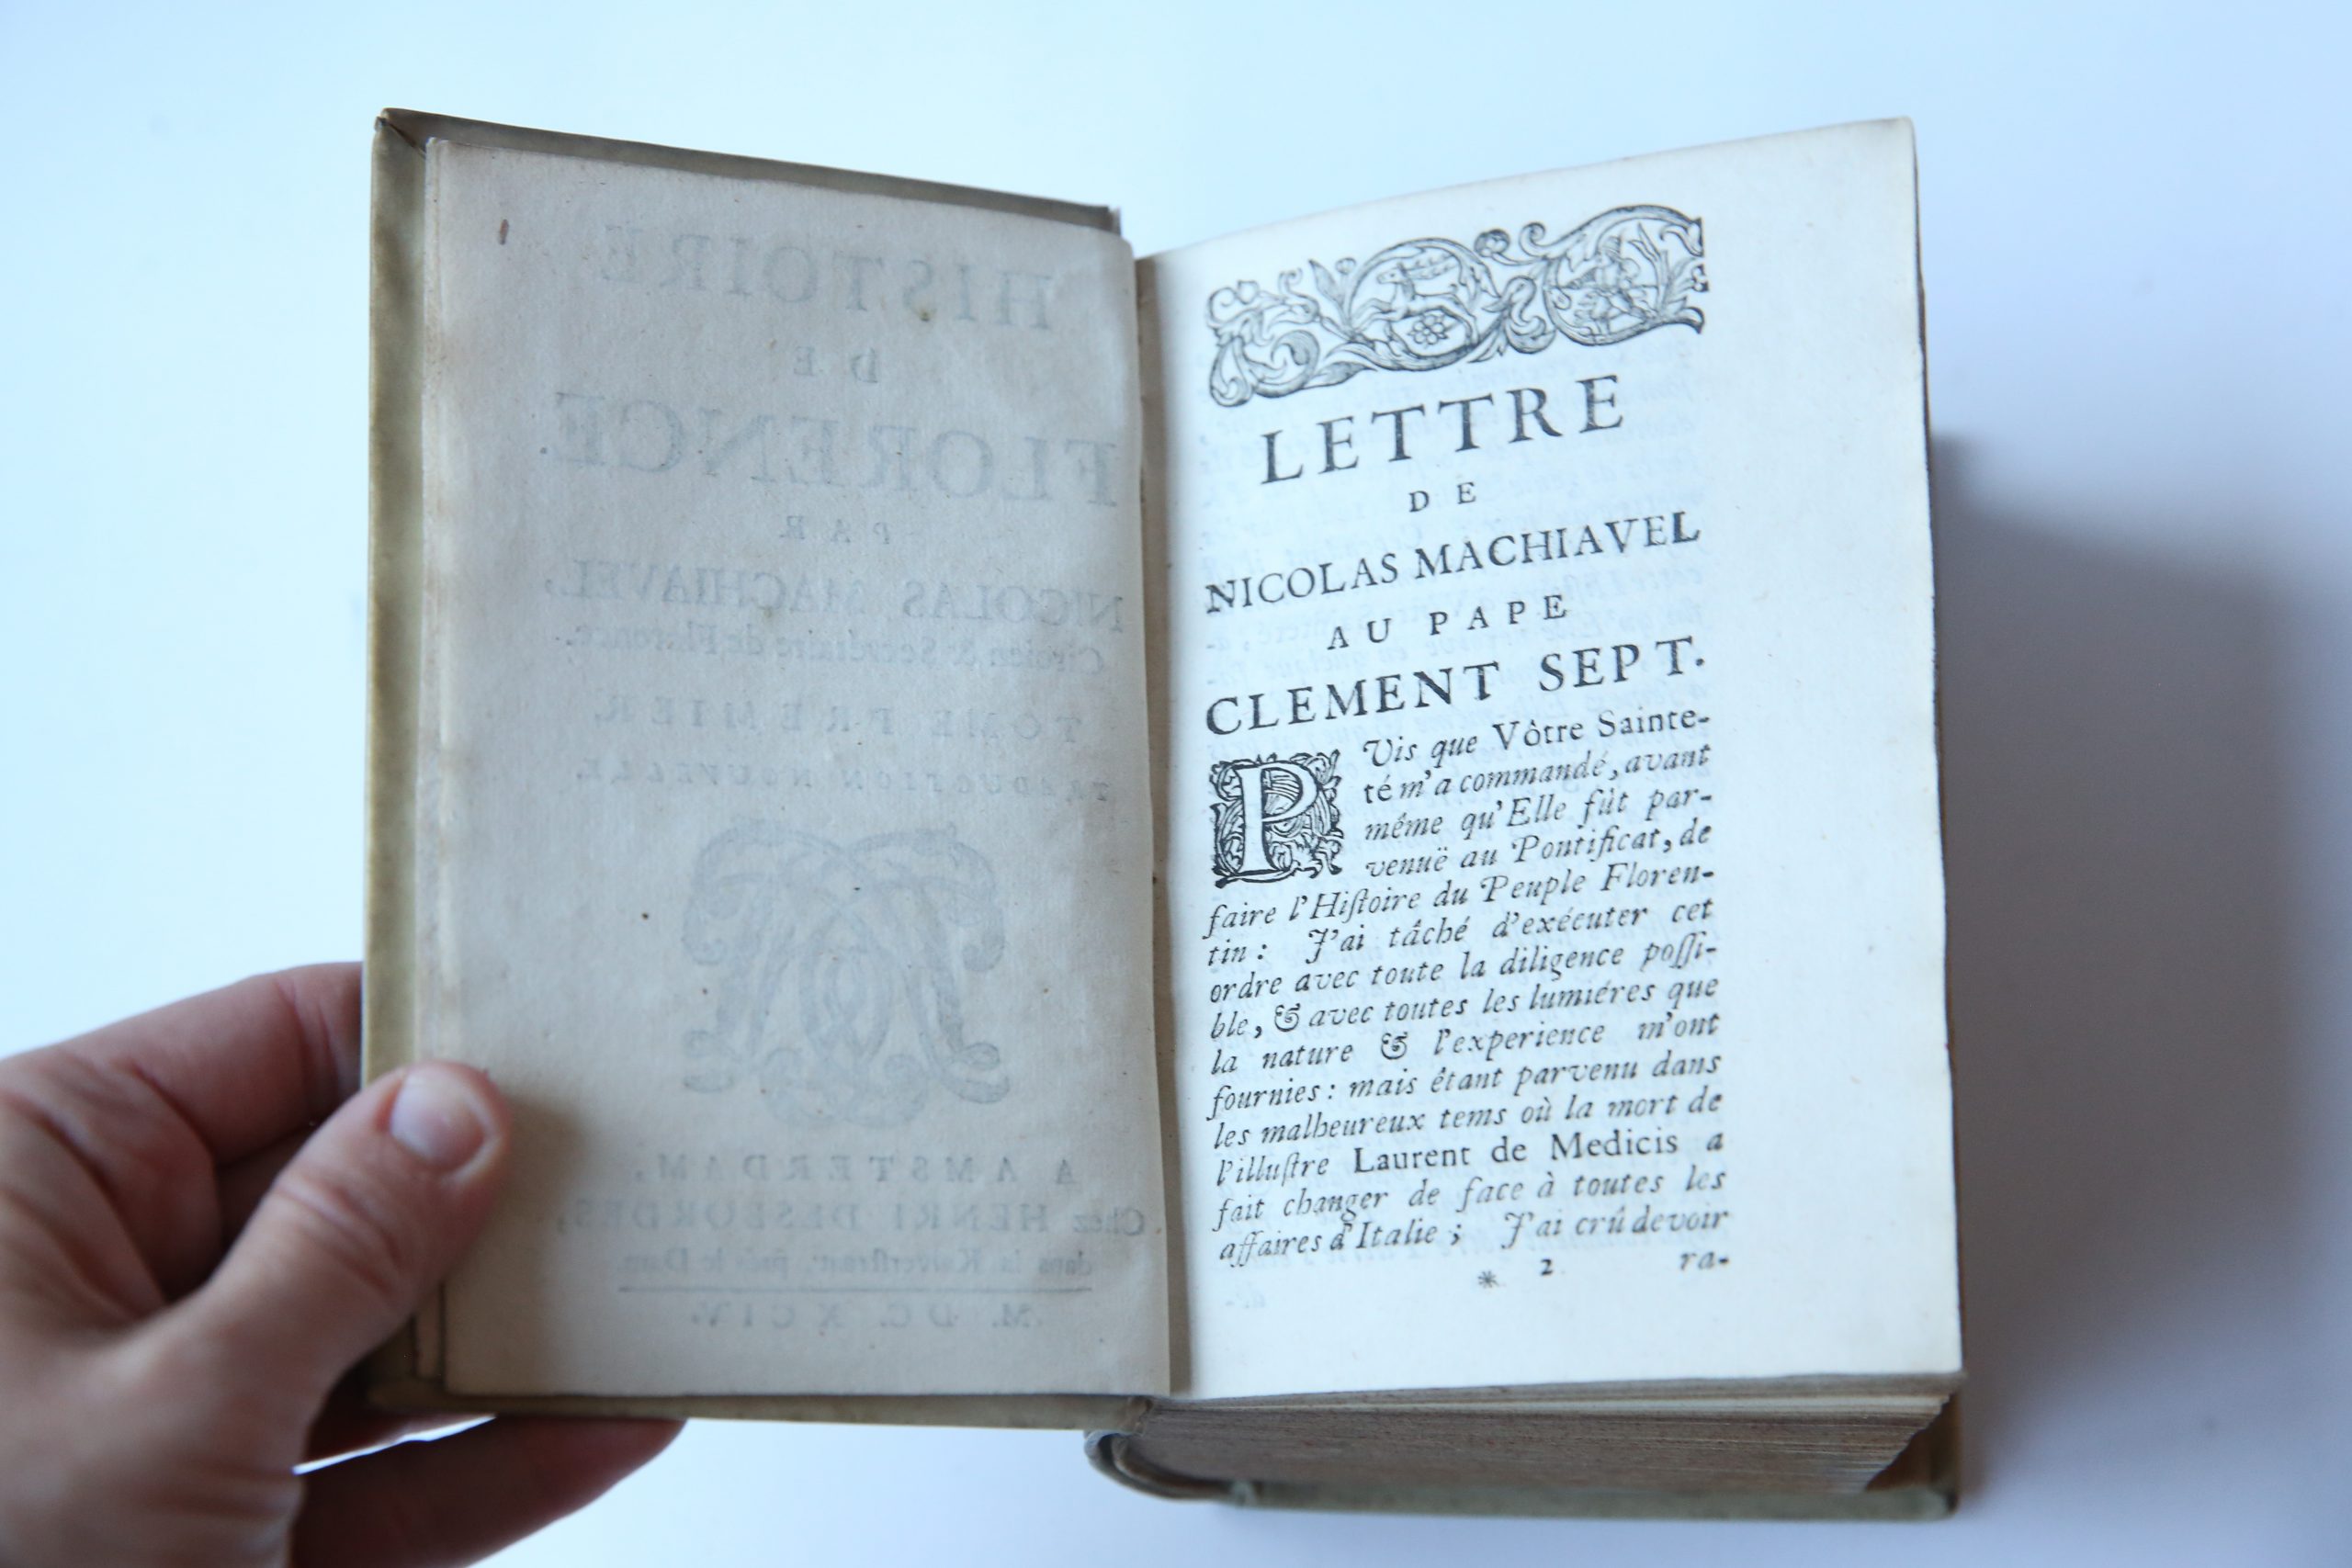 Histoire de Florence. 2 delen in 1 band, Amsterdam, H. Desbordes, 1694.